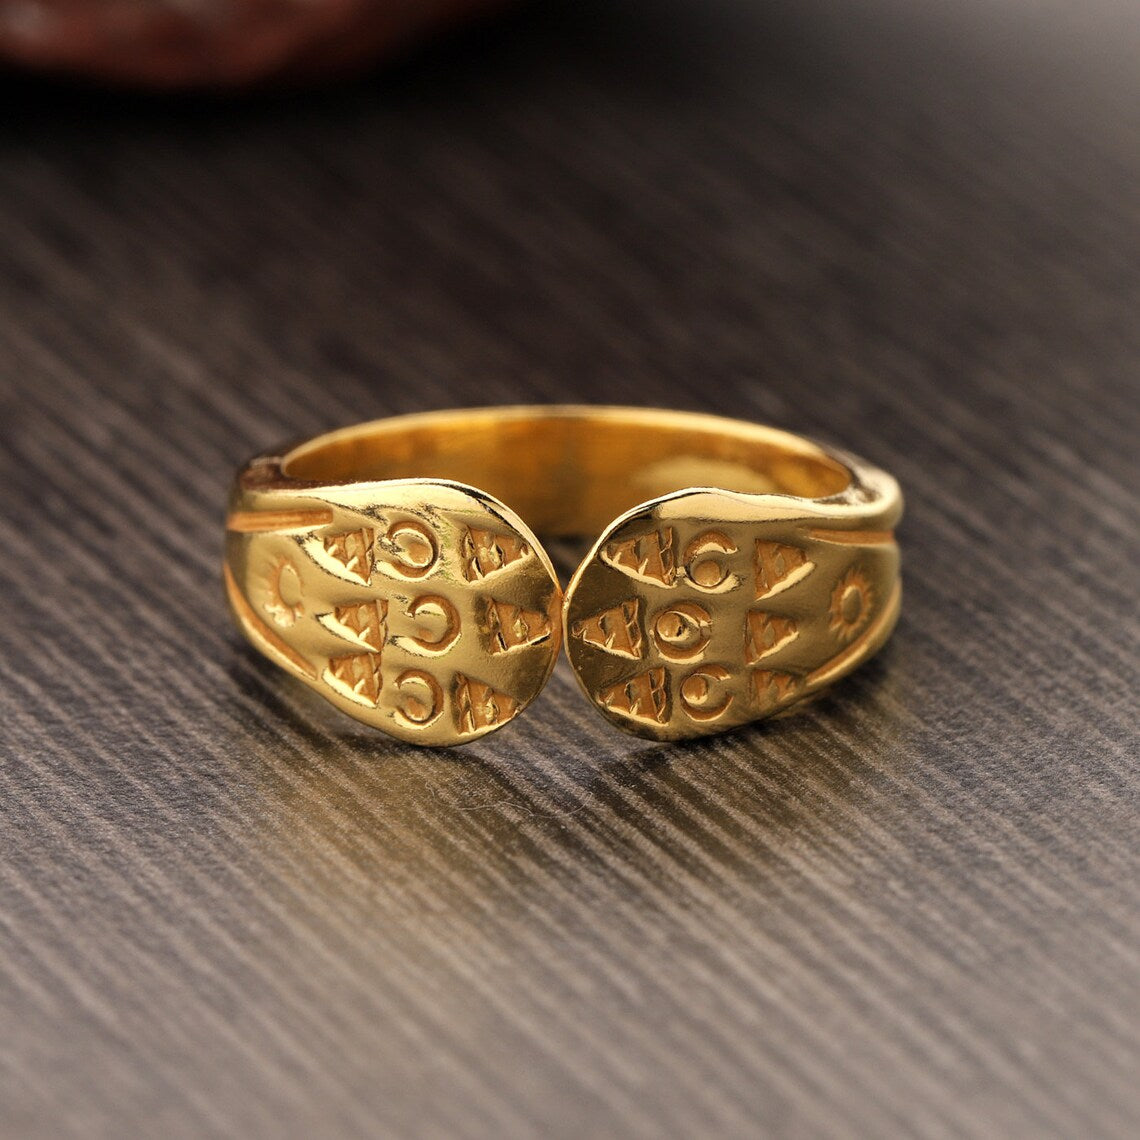 Open Rings, Adjustable Gold Ring, Dainty Rings, Minimalist Rings, Bar Rings, Double Bar Rings